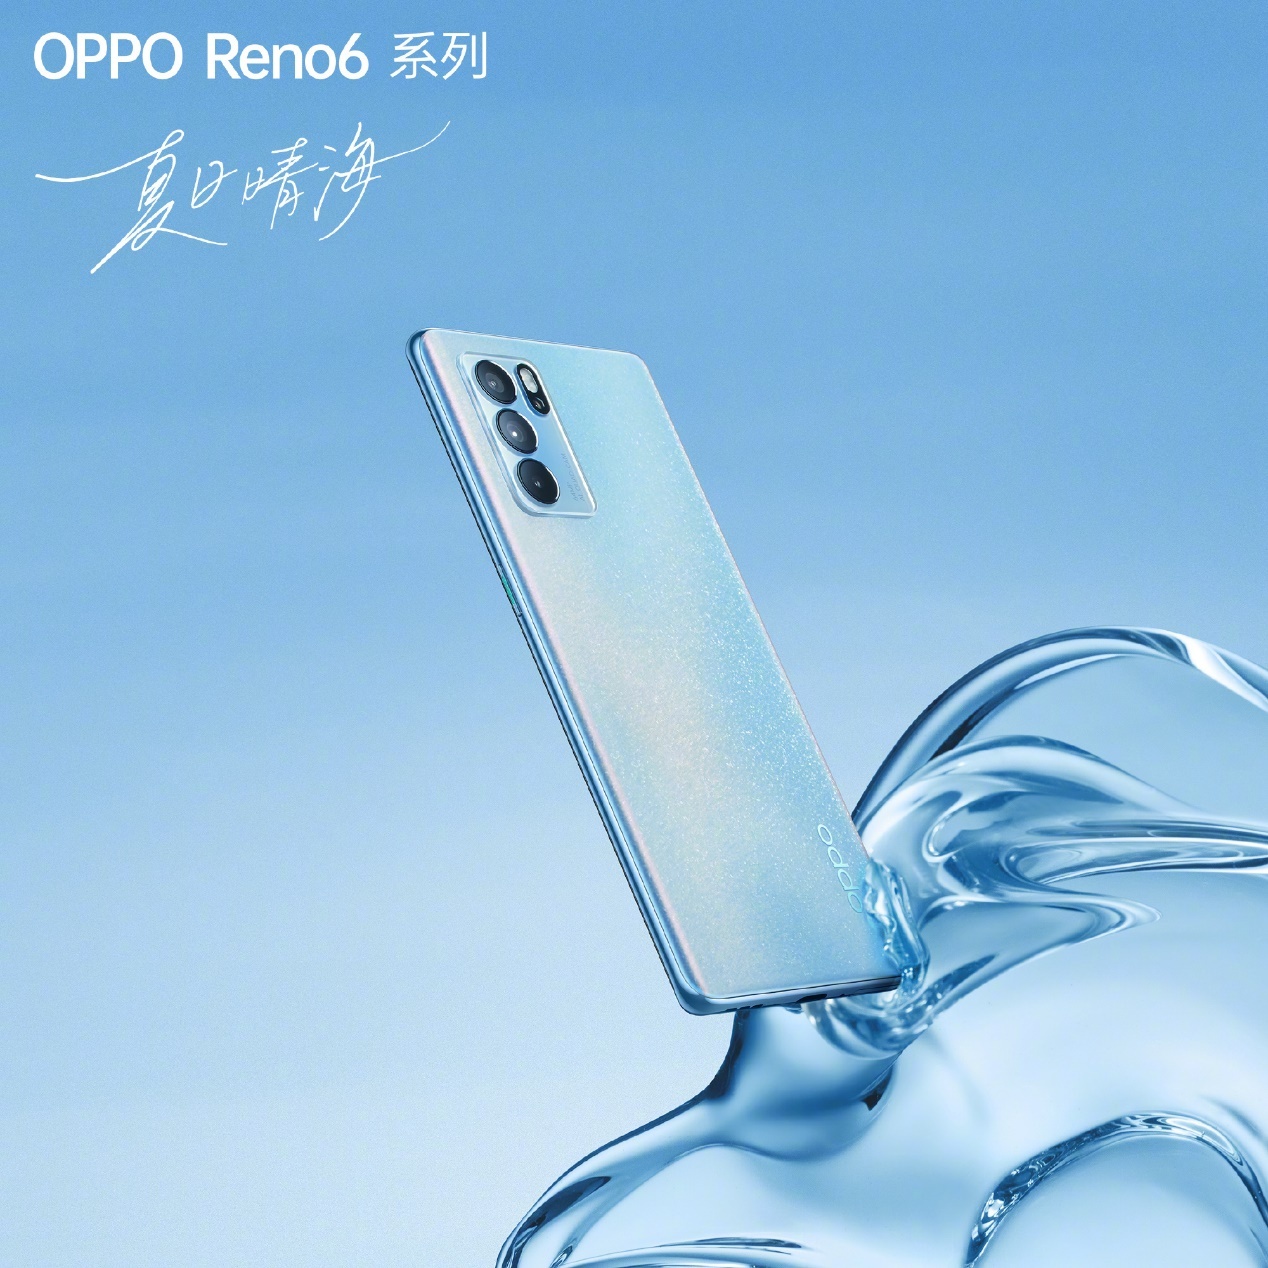 OPPO Reno6系列爆料信息汇总 性能影像新升级